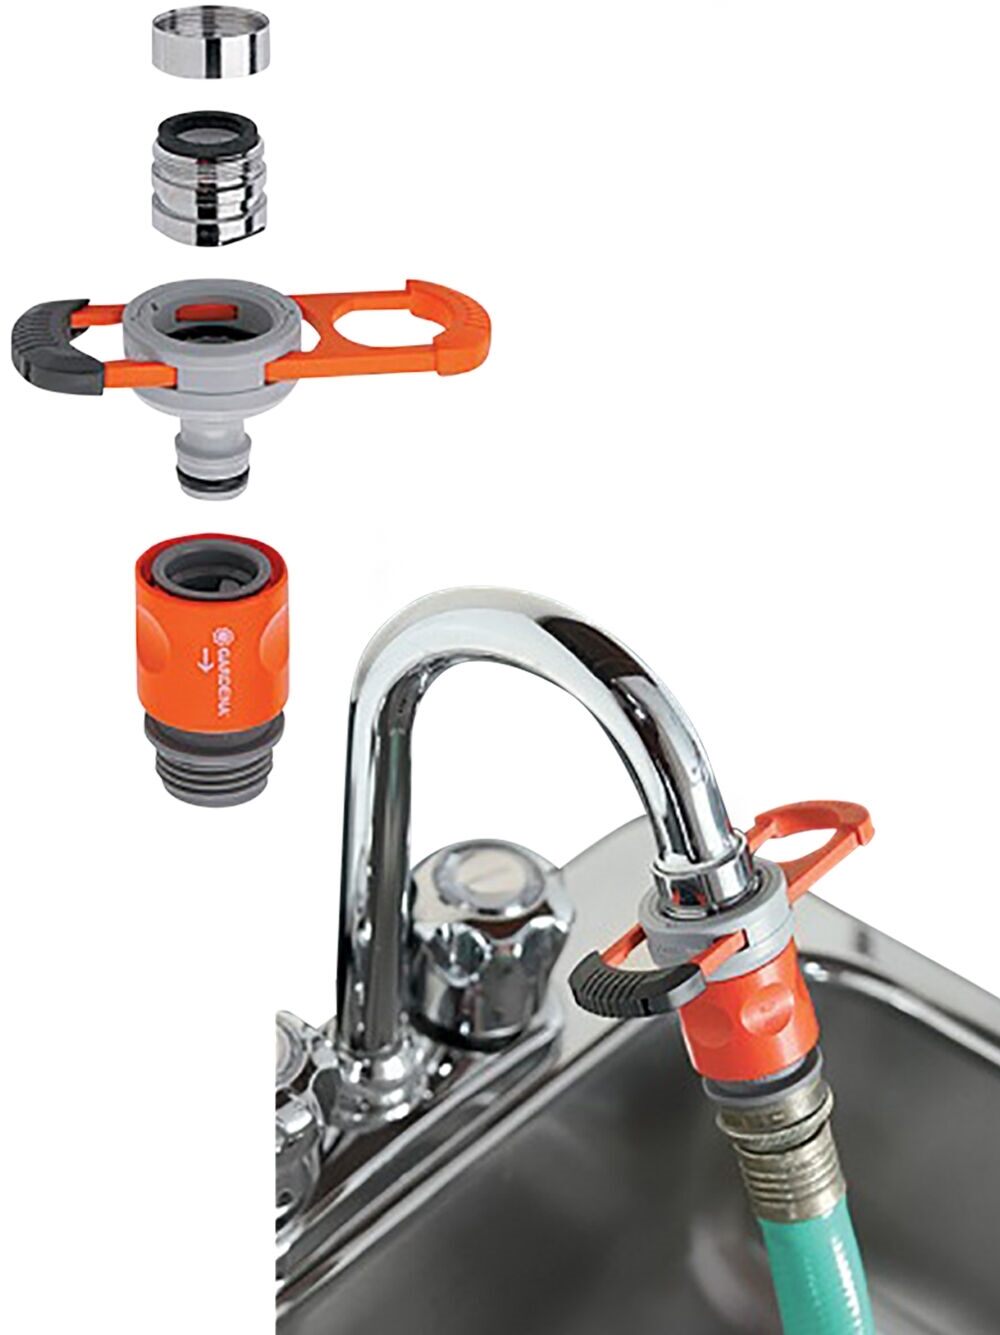 Sink Faucet To Garden Hose Adapter, Kitchen Faucet Adaptor For Garden Hose